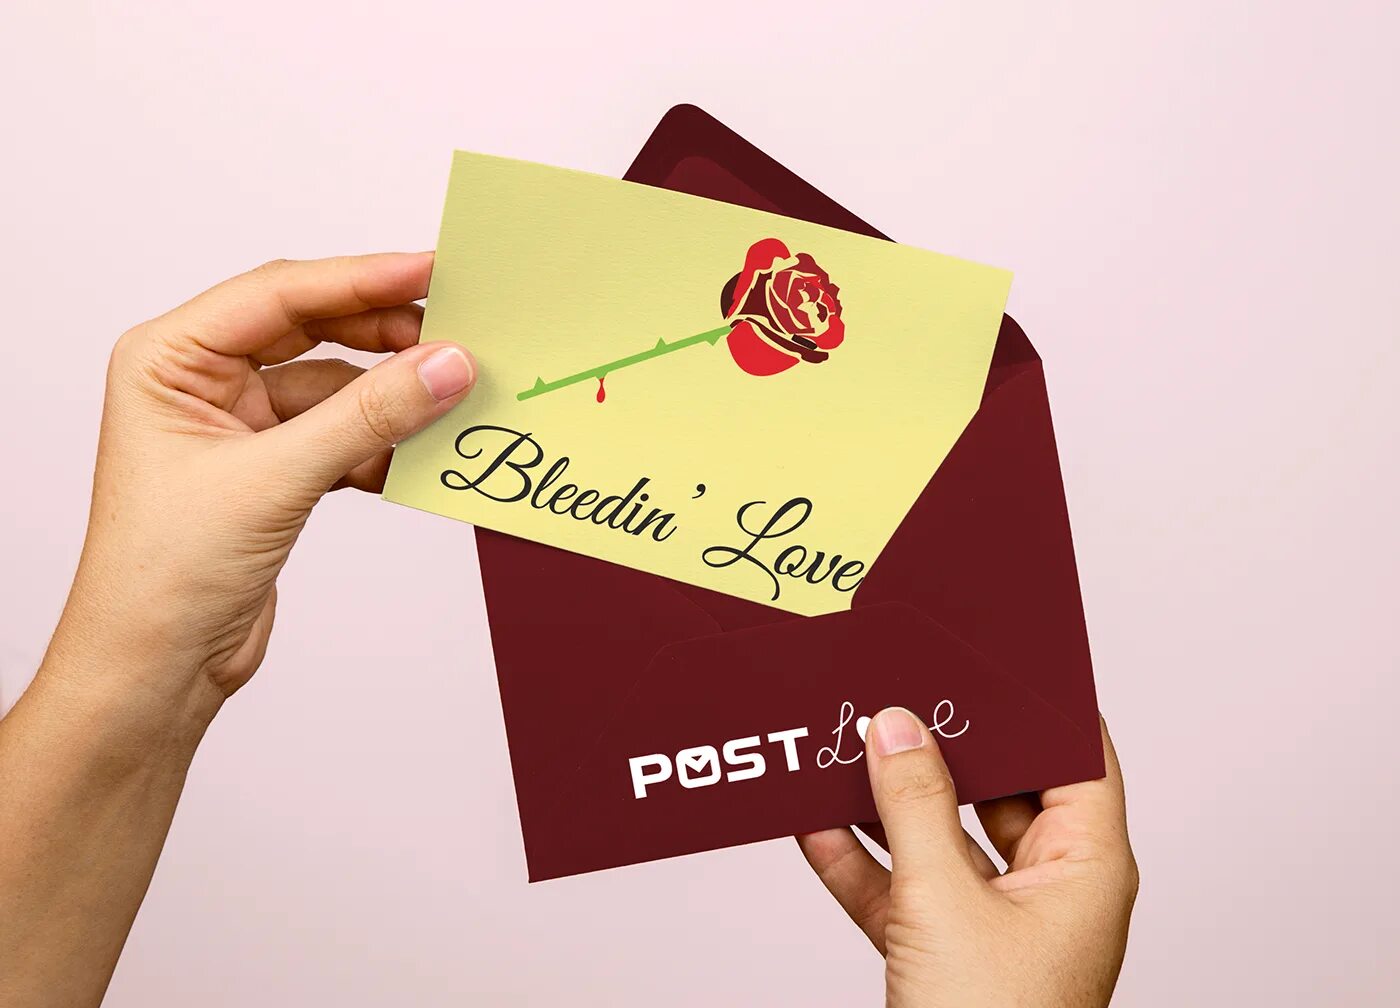 Postcard. Postcard Design. Card & Envelope. Post Card. Picture postcard